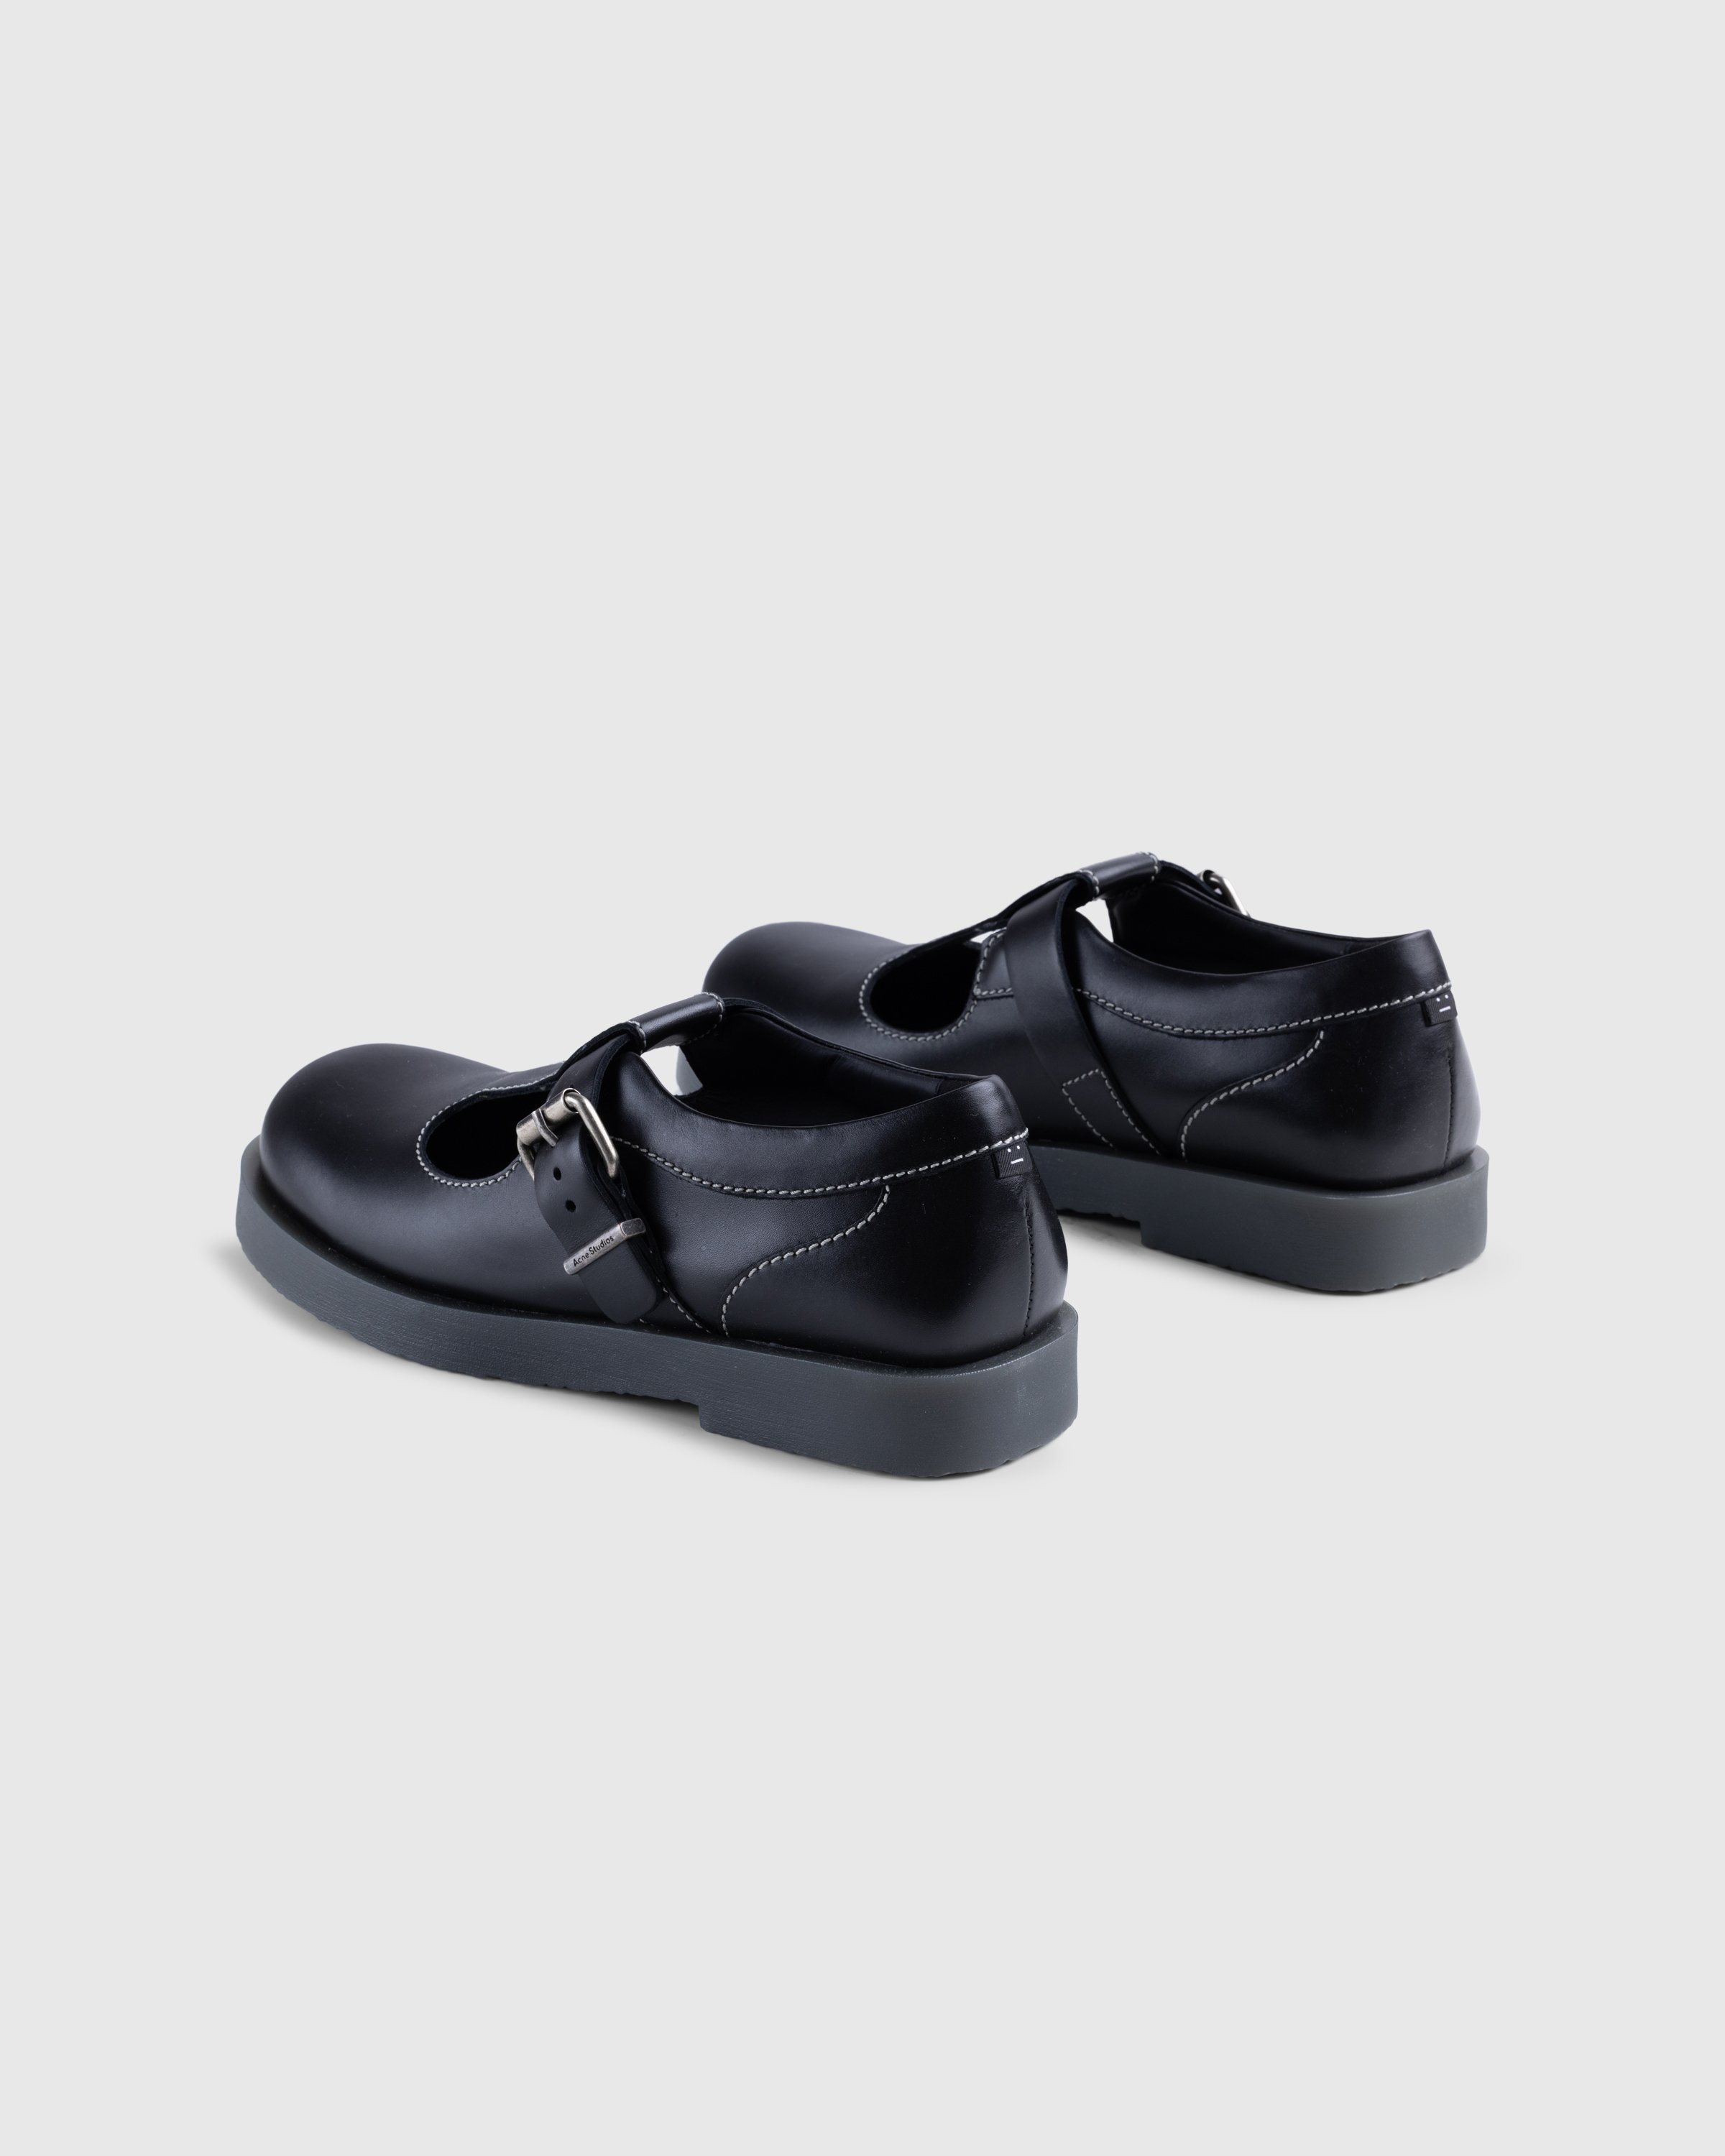 Acne Studios - Berylab Leather Buckle Shoes Black - Footwear - Black - Image 4